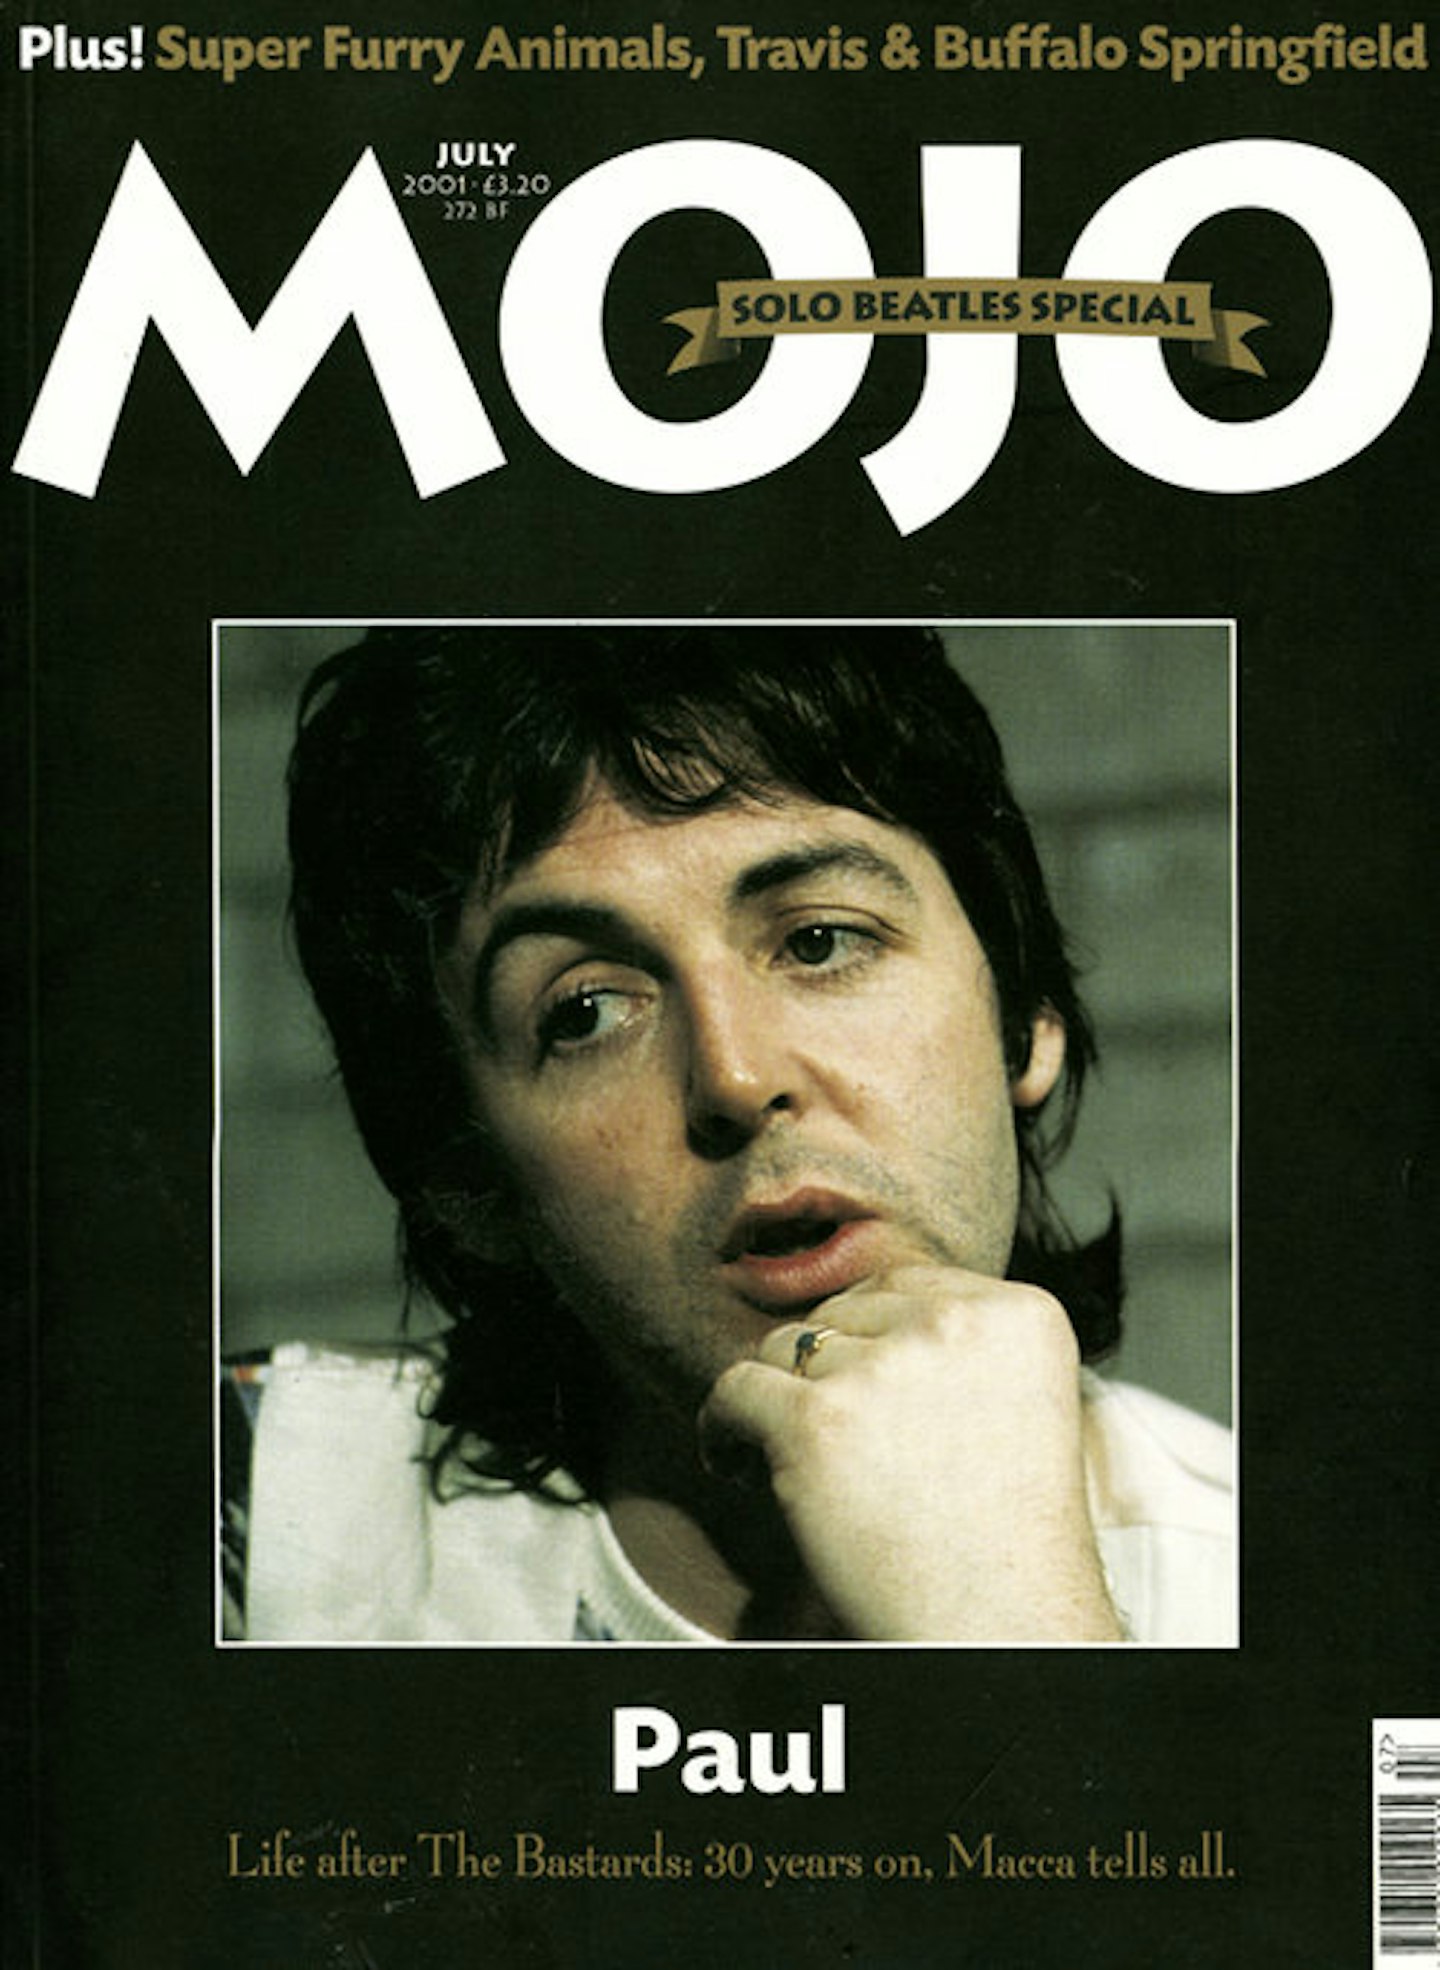 MOJO Issue 92 / July 2001 / Paul